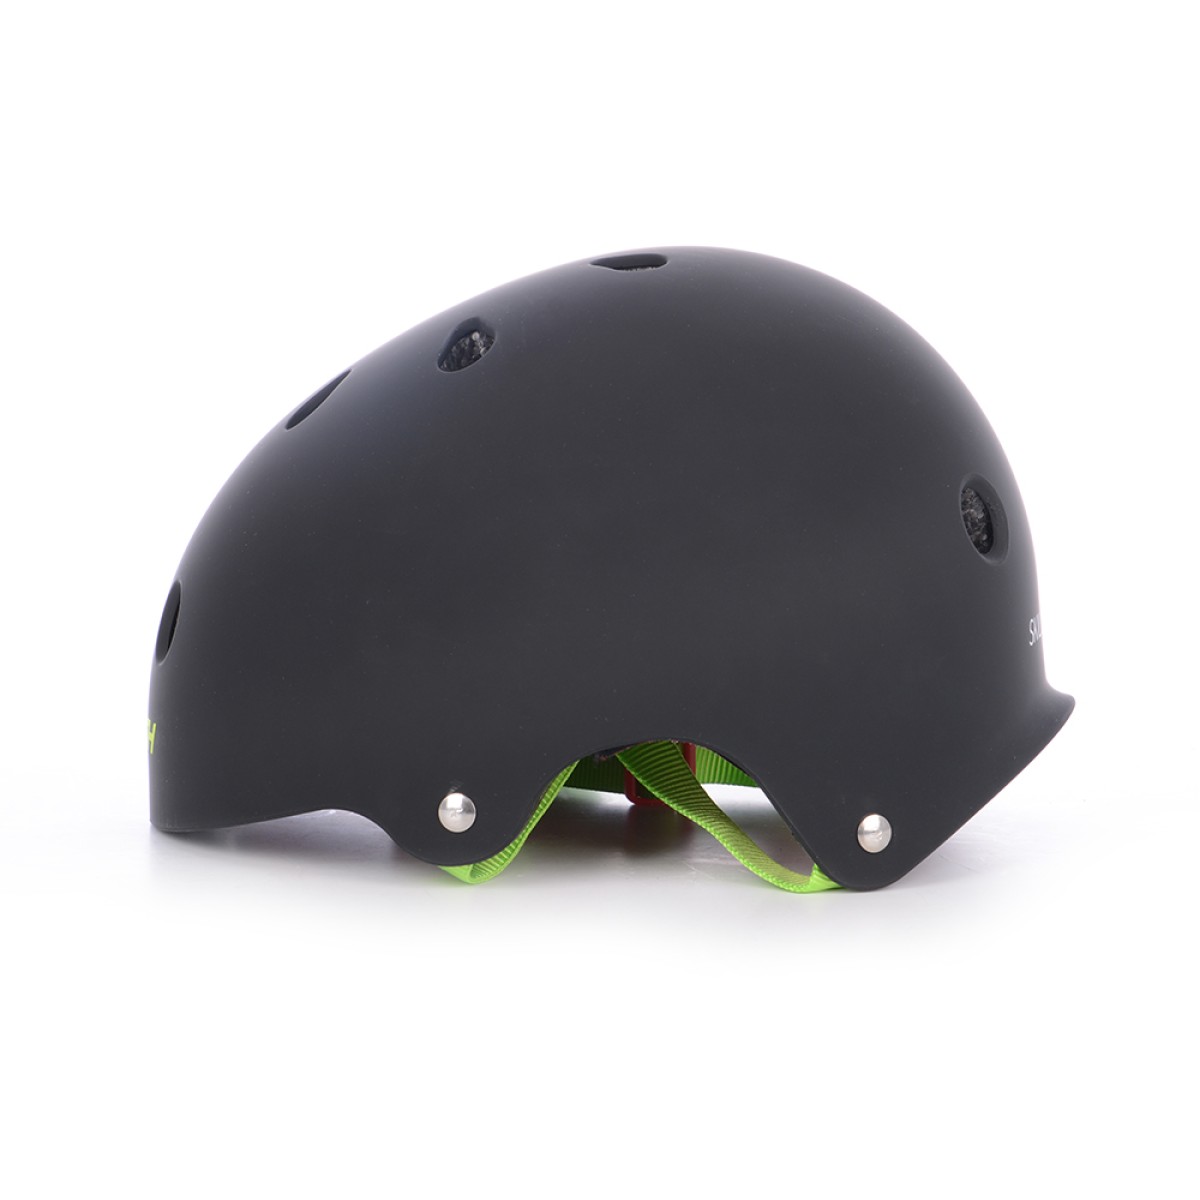 SKILLET X skate helmet black sky TEMPISH - view 5